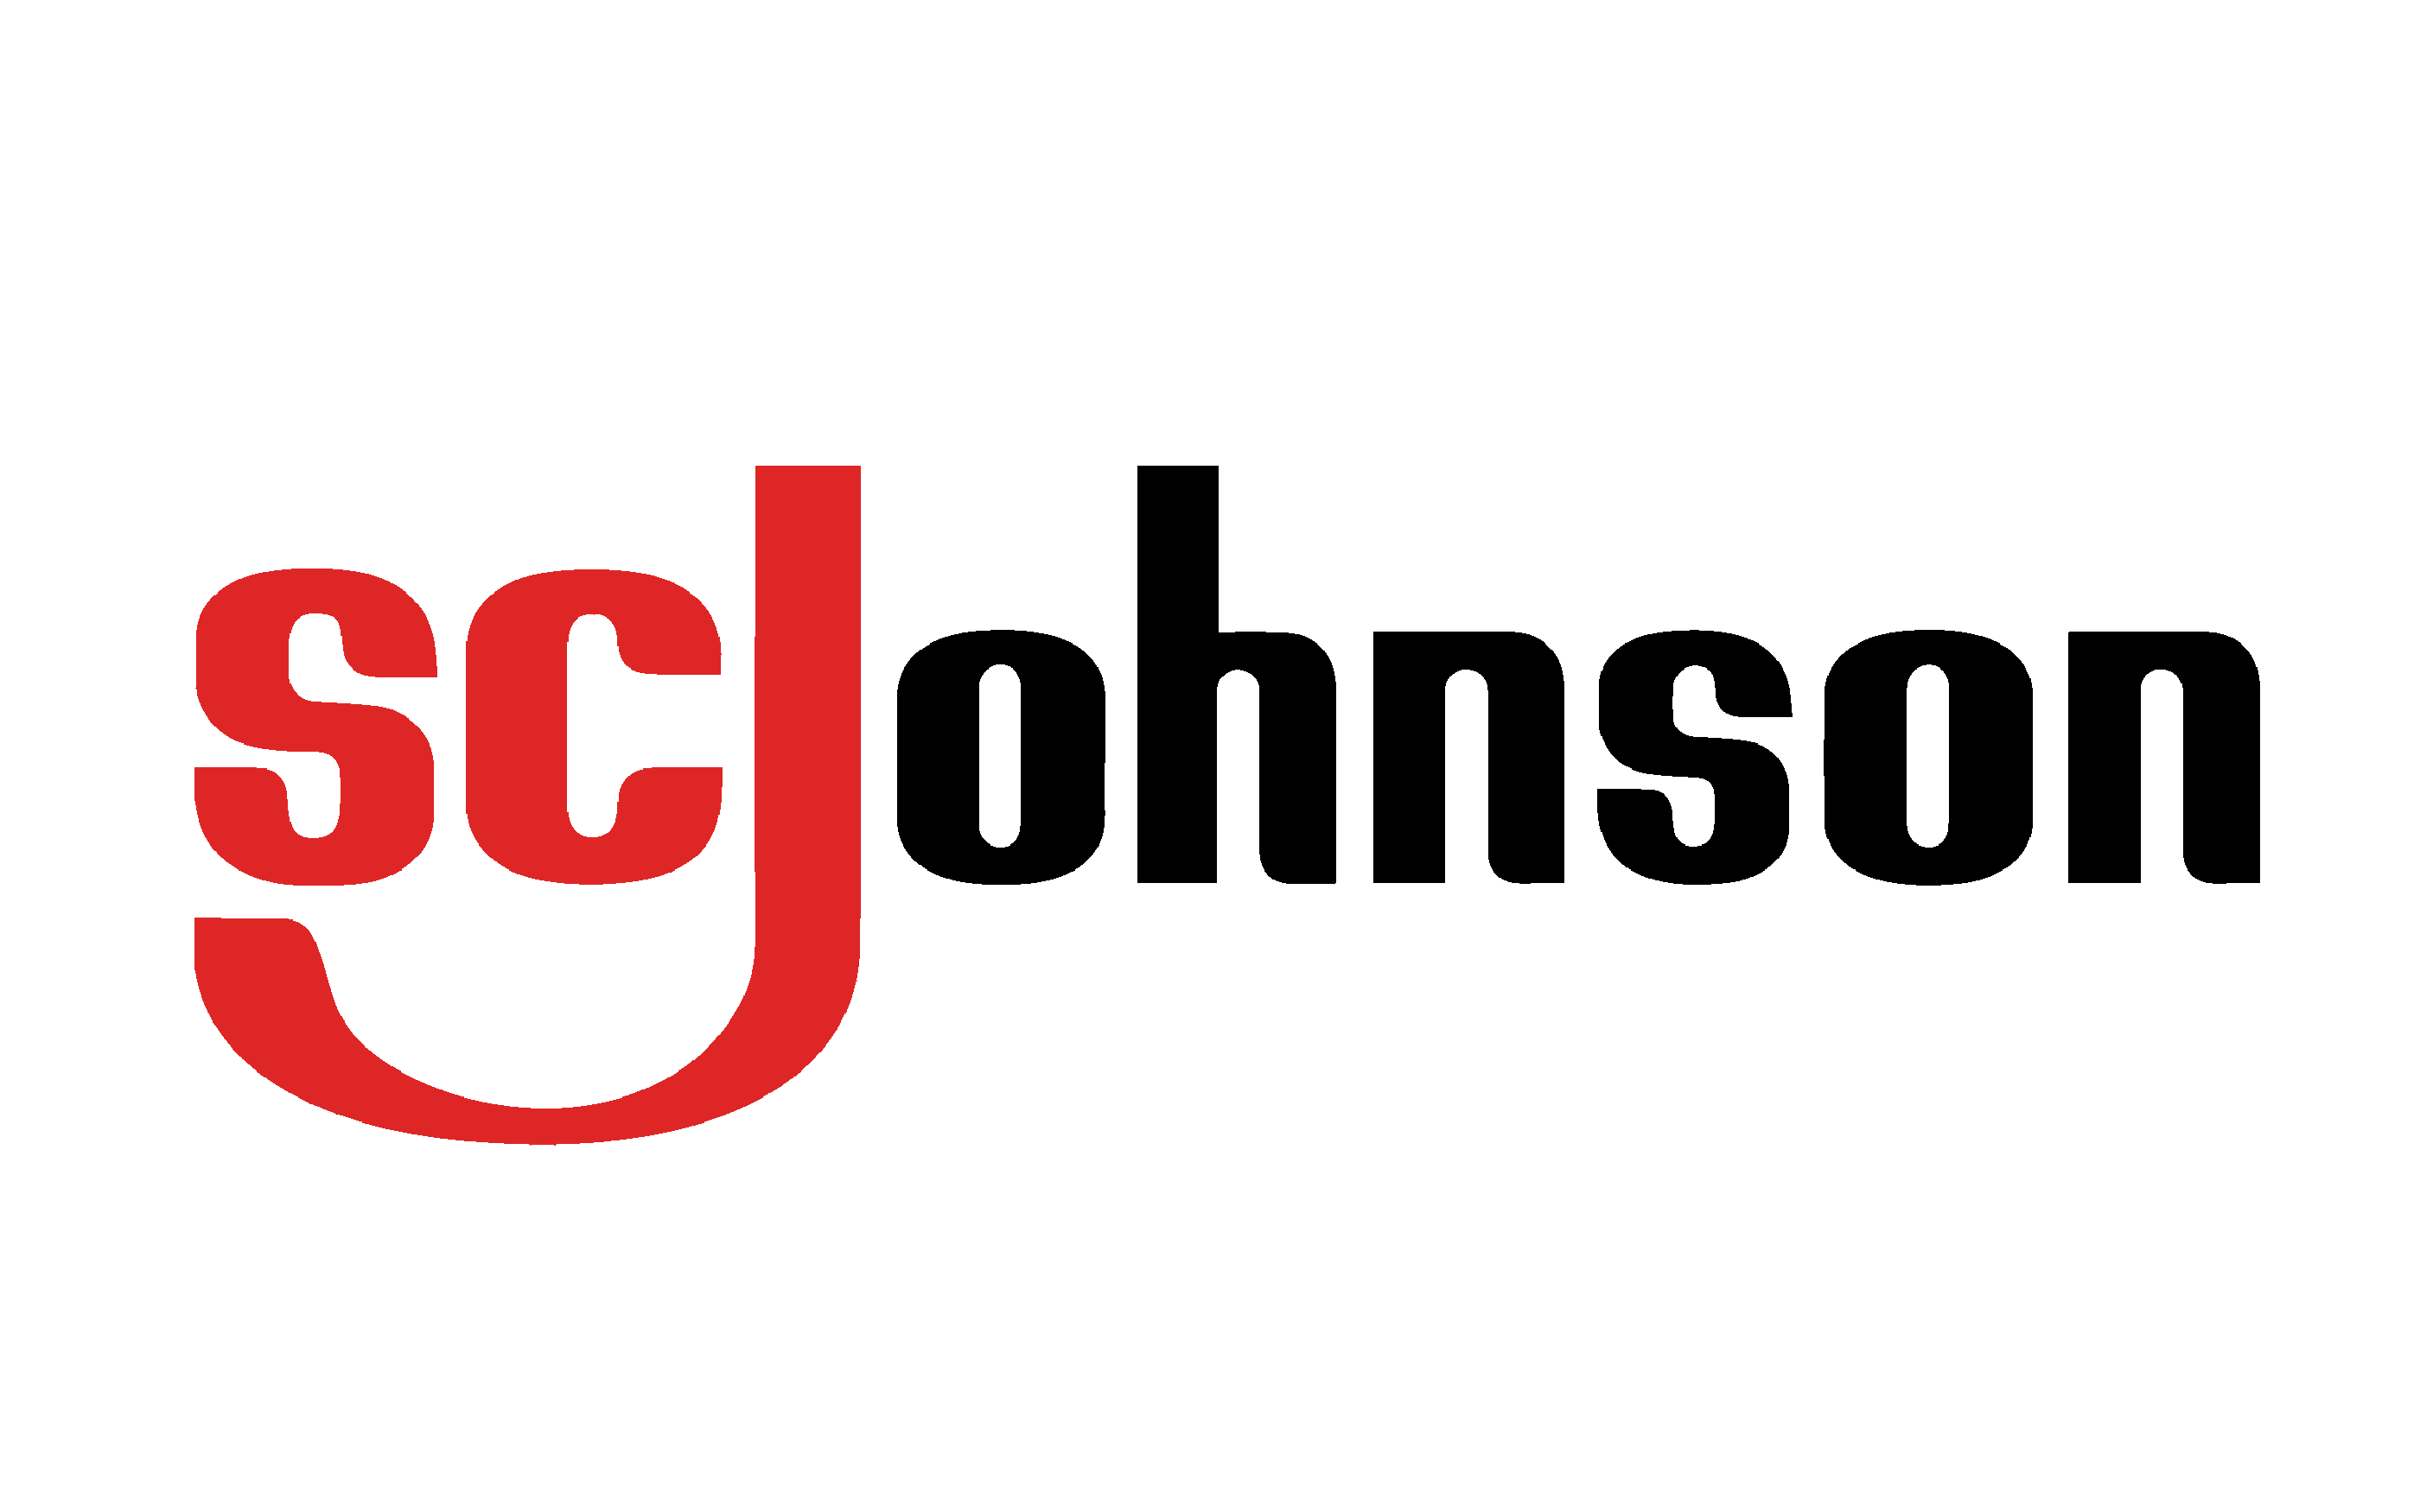 S C Johnson logo